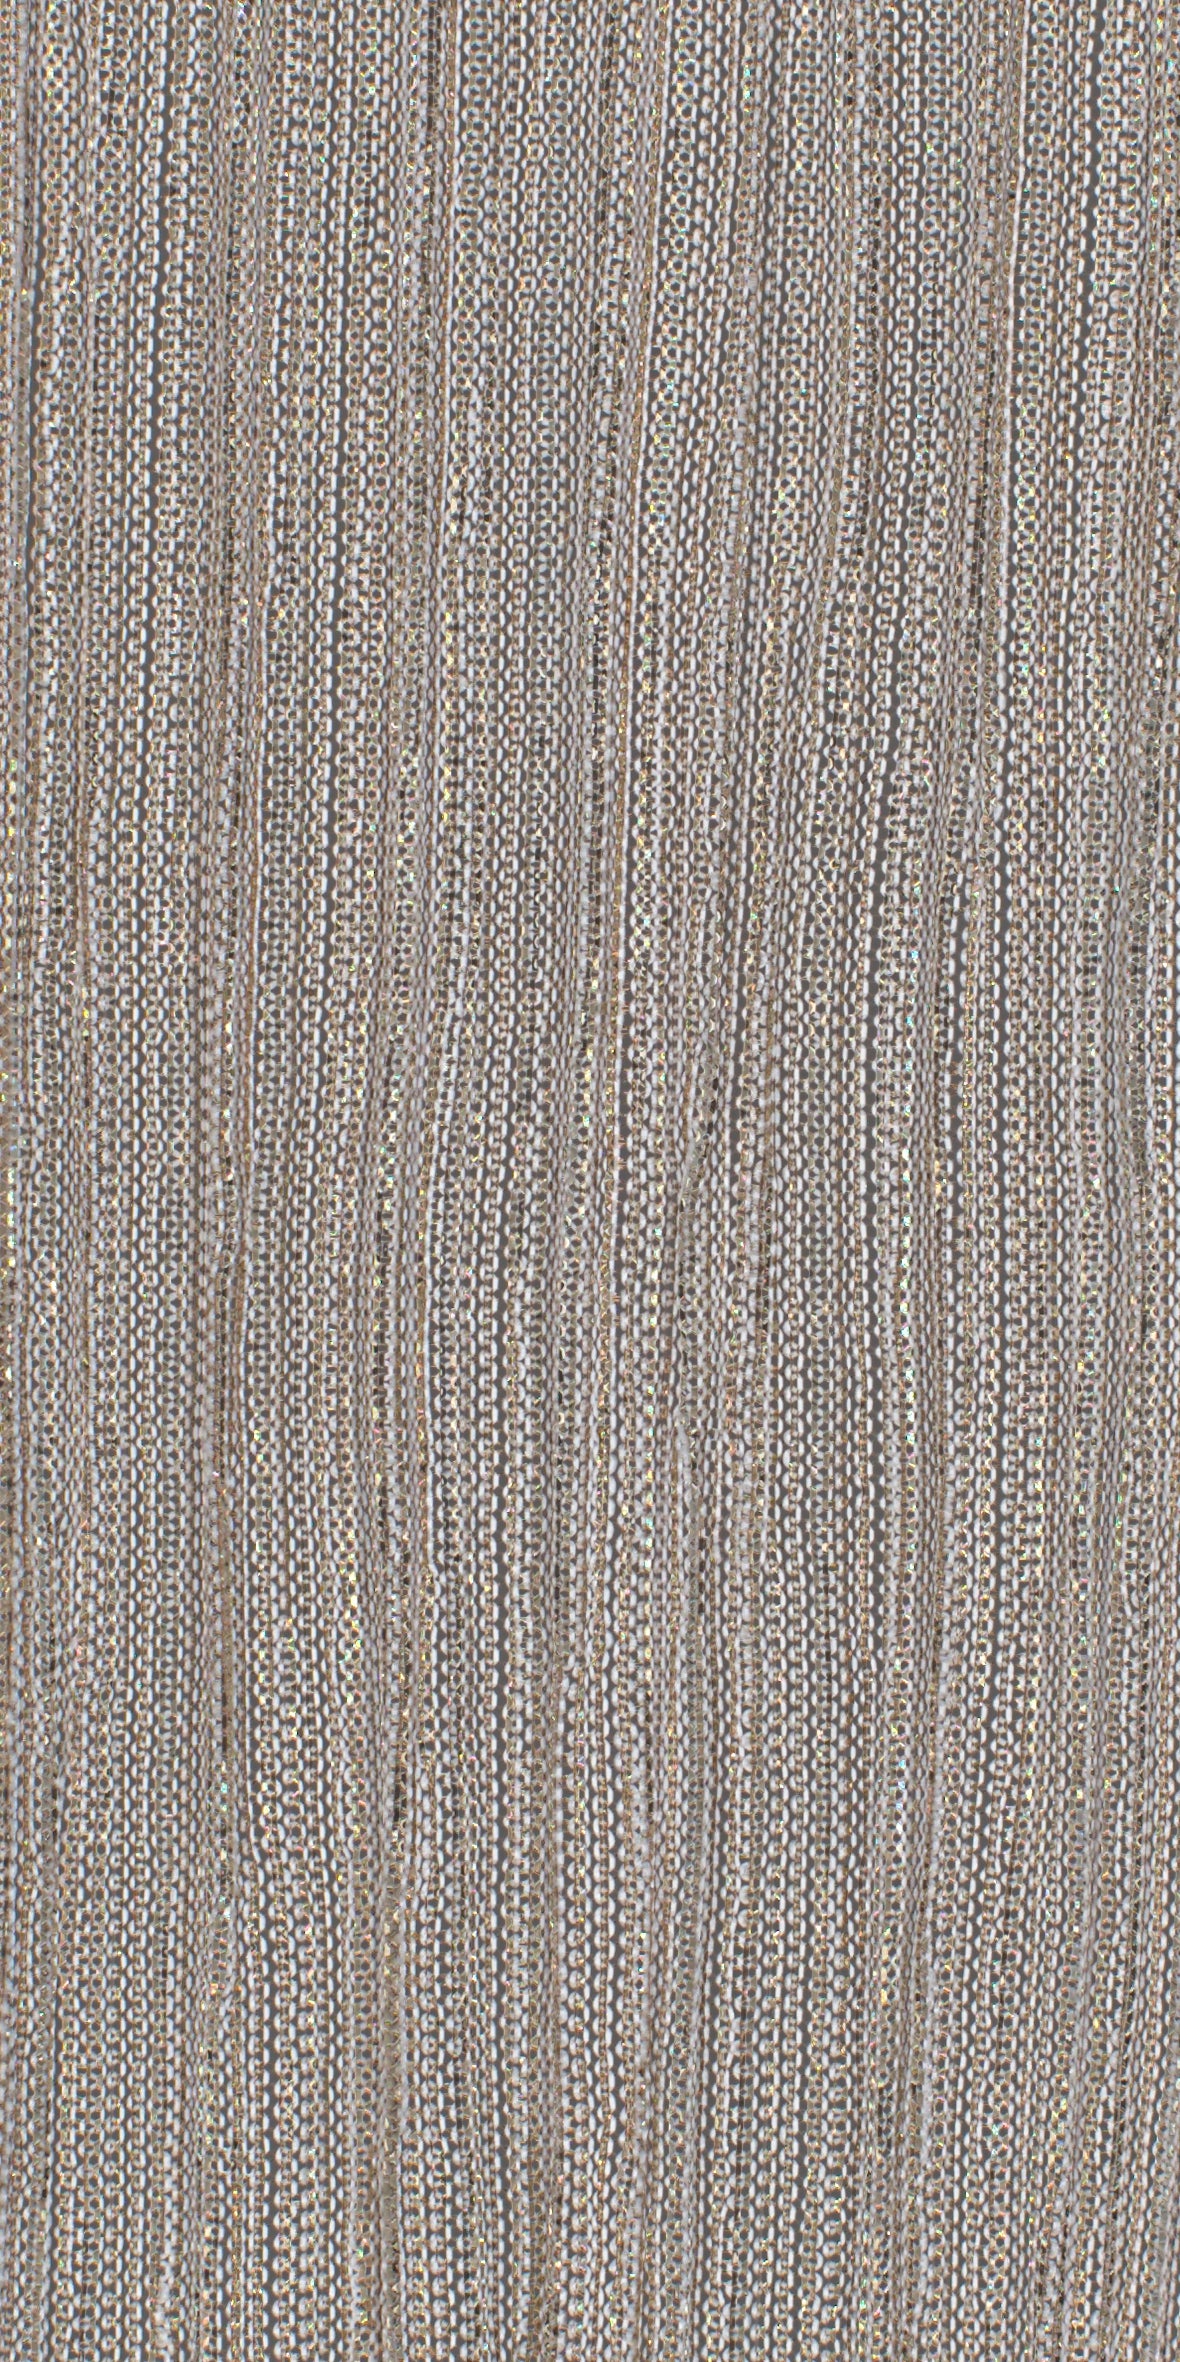 12006-01 Gold Beige Metallic Pleat Plain Dyed Blend 126g/yd 56" beige blend gold knit metallic plain dyed pleat ppl new Metallic, Pleat - knit fabric - woven fabric - fabric company - fabric wholesale - fabric b2b - fabric factory - high quality fabric - hong kong fabric - fabric hk - acetate fabric - cotton fabric - linen fabric - metallic fabric - nylon fabric - polyester fabric - spandex fabric - chun wing hing - cwh hk - fabric worldwide ship - 針織布 - 梳織布 - 布料公司- 布料批發 - 香港布料 - 秦榮興